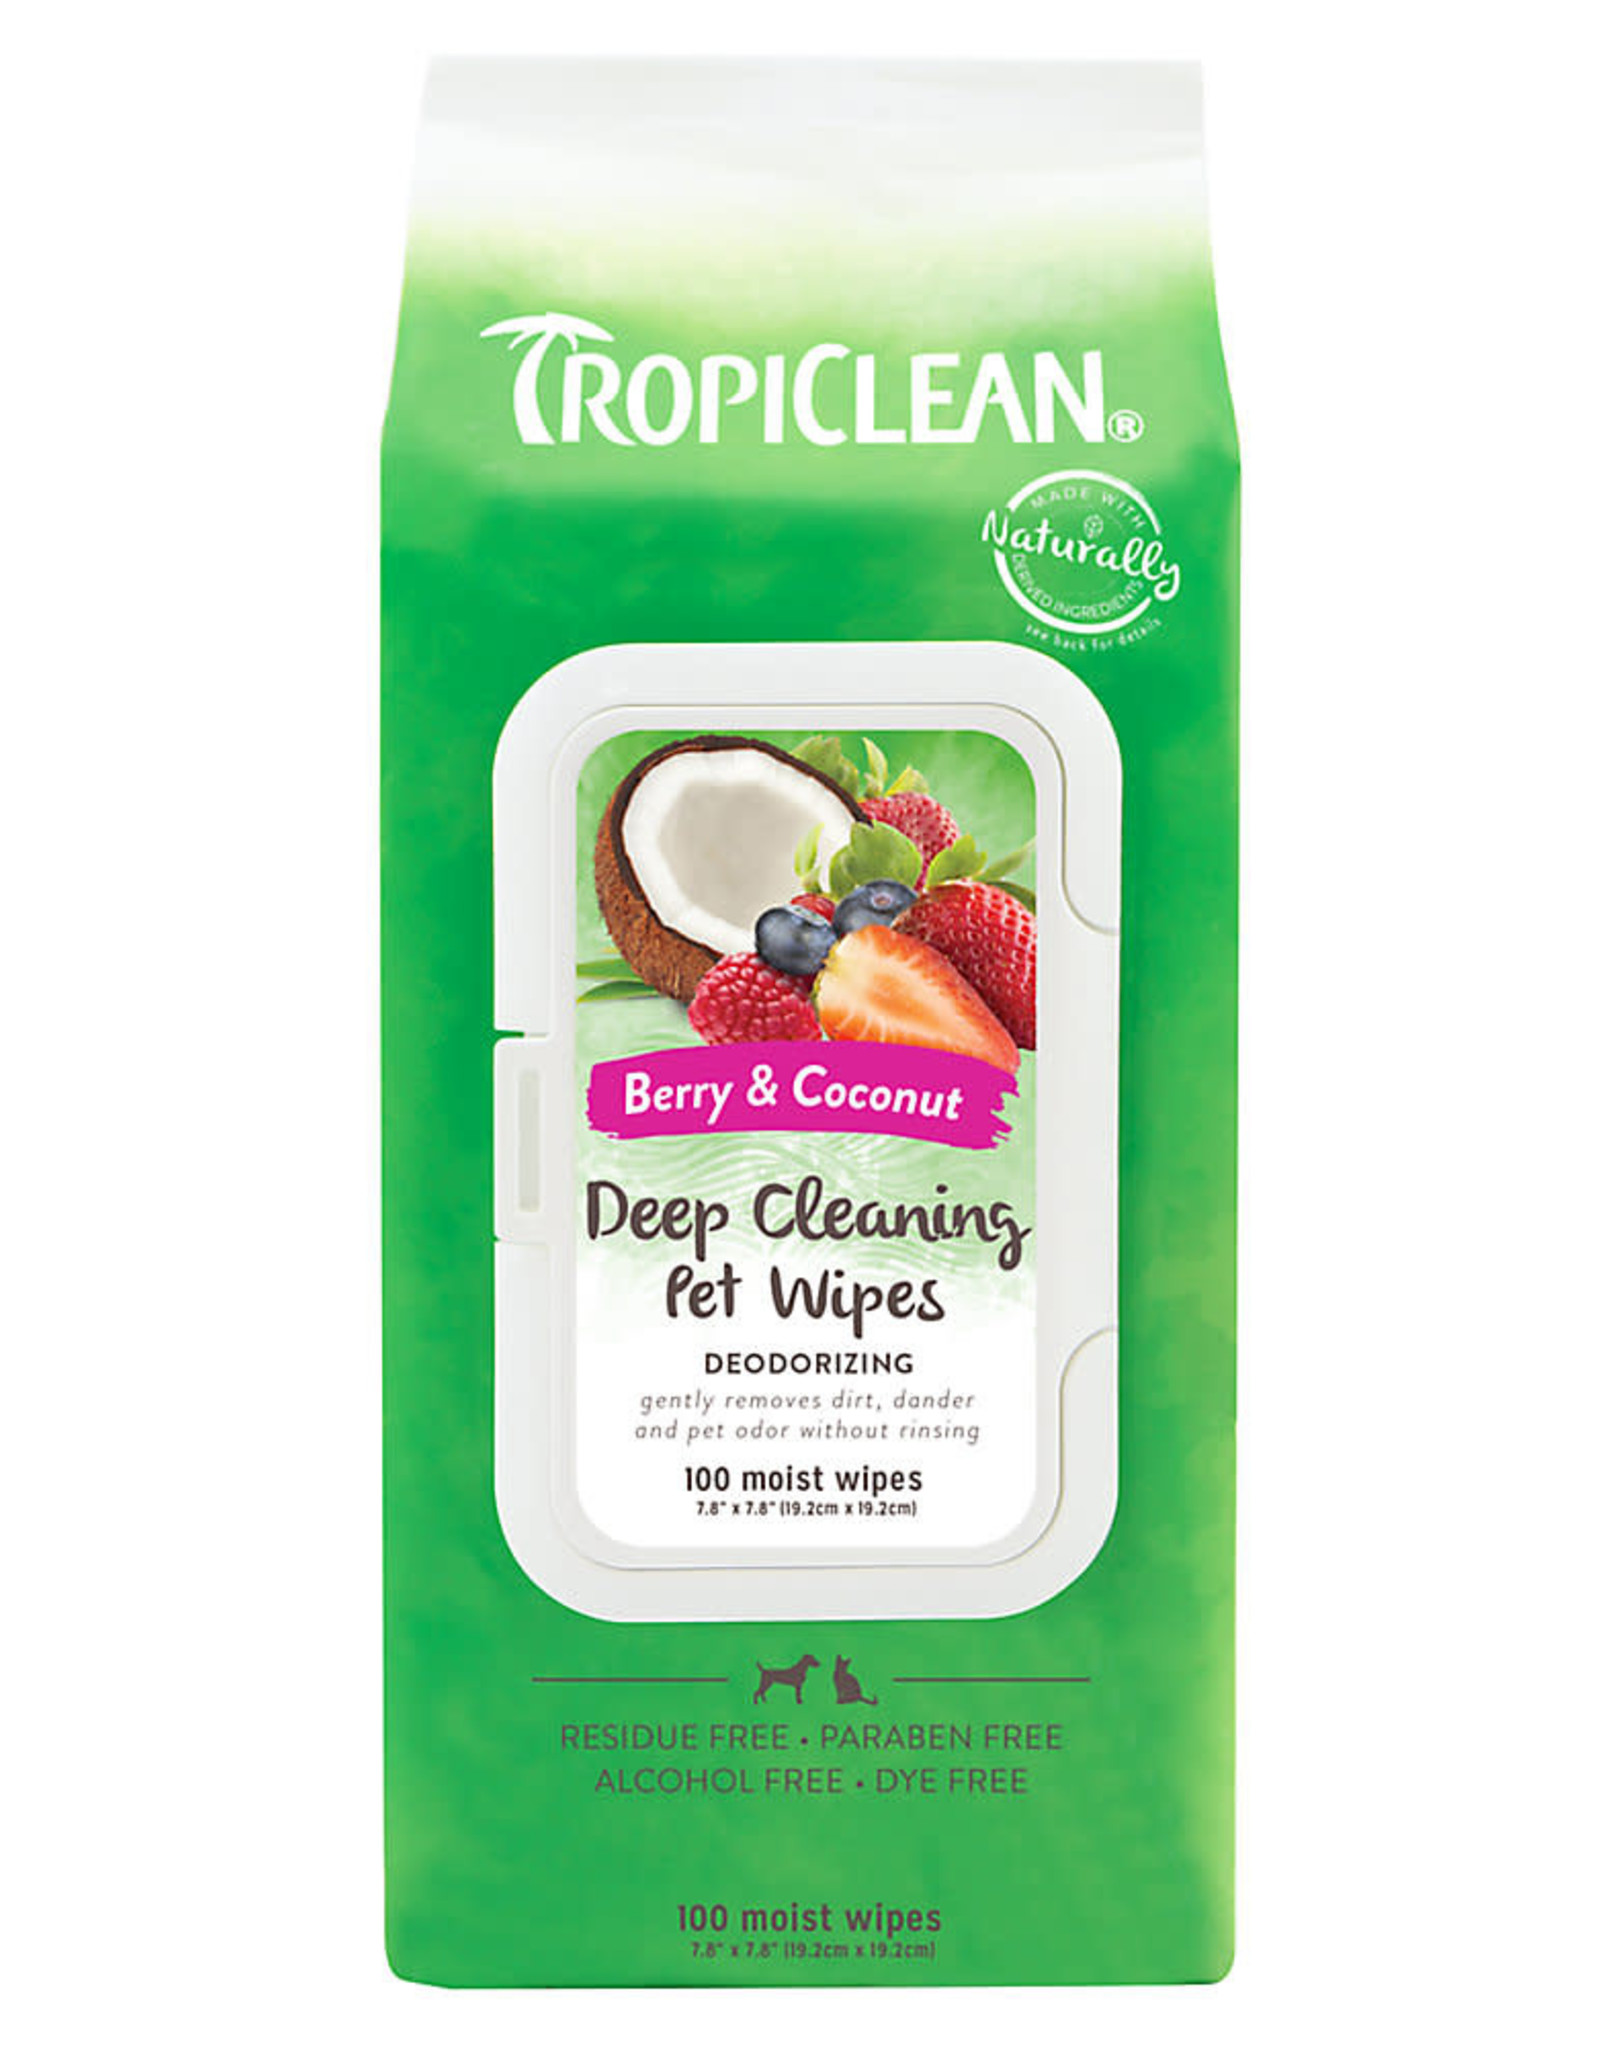 TropiClean Tropiclean Wipes Deep Cleaning Deodorizing 100 Count